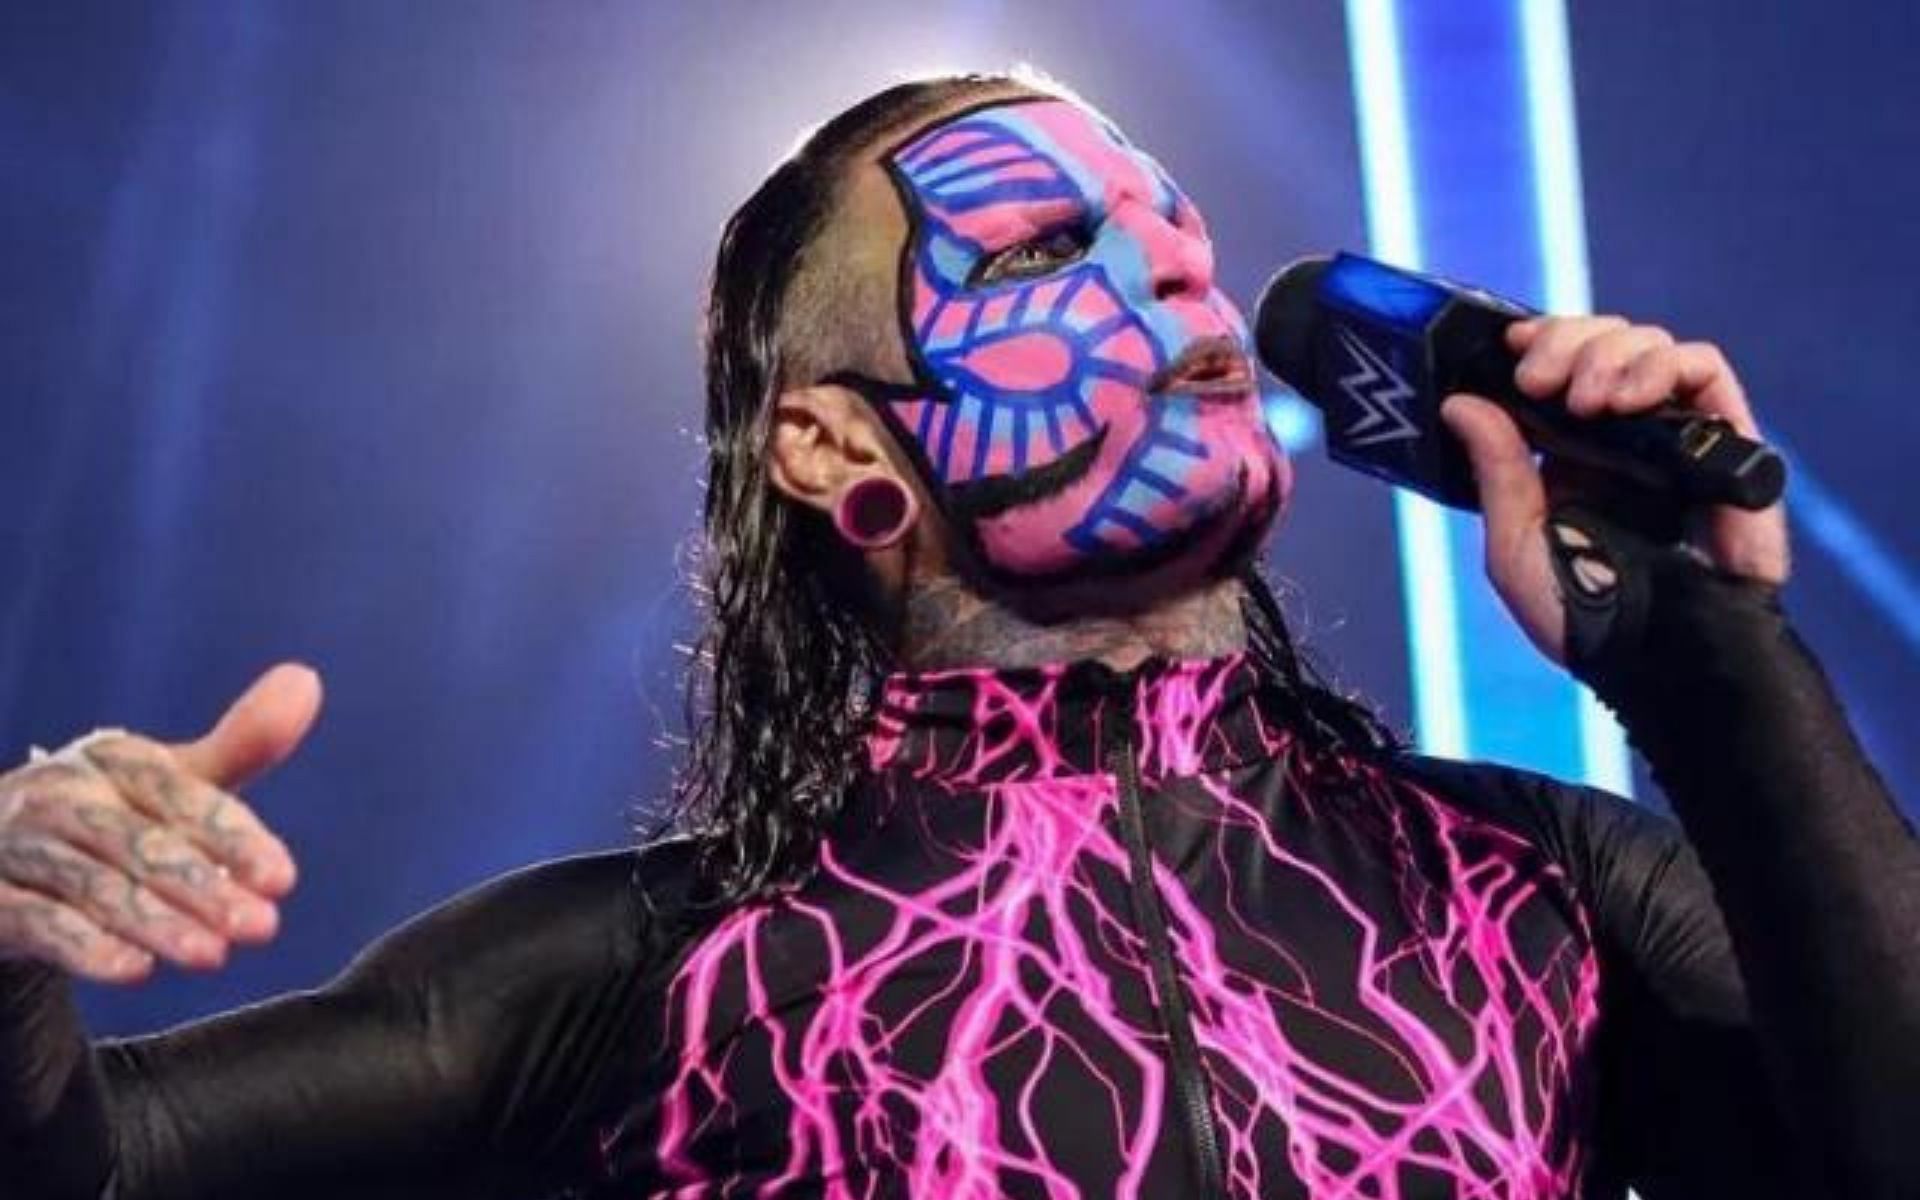 Jeff Hardy debuted on AEW last year